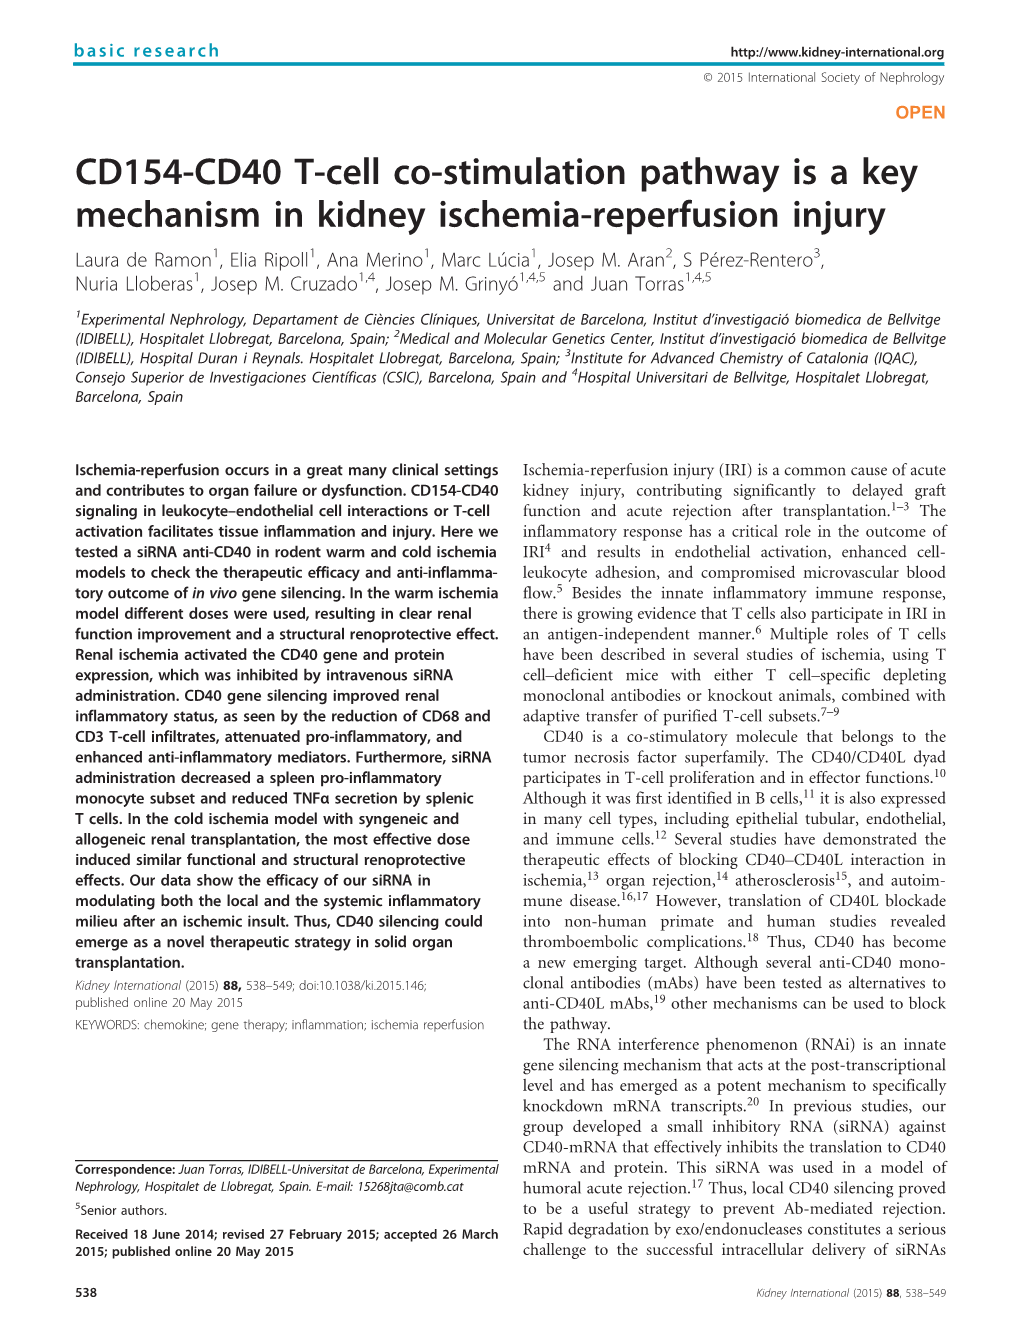 CD154-CD40 T-Cell Co-Stimulation Pathway Is a Key Mechanism in Kidney Ischemia-Reperfusion Injury Laura De Ramon1, Elia Ripoll1, Ana Merino1, Marc Lúcia1, Josep M